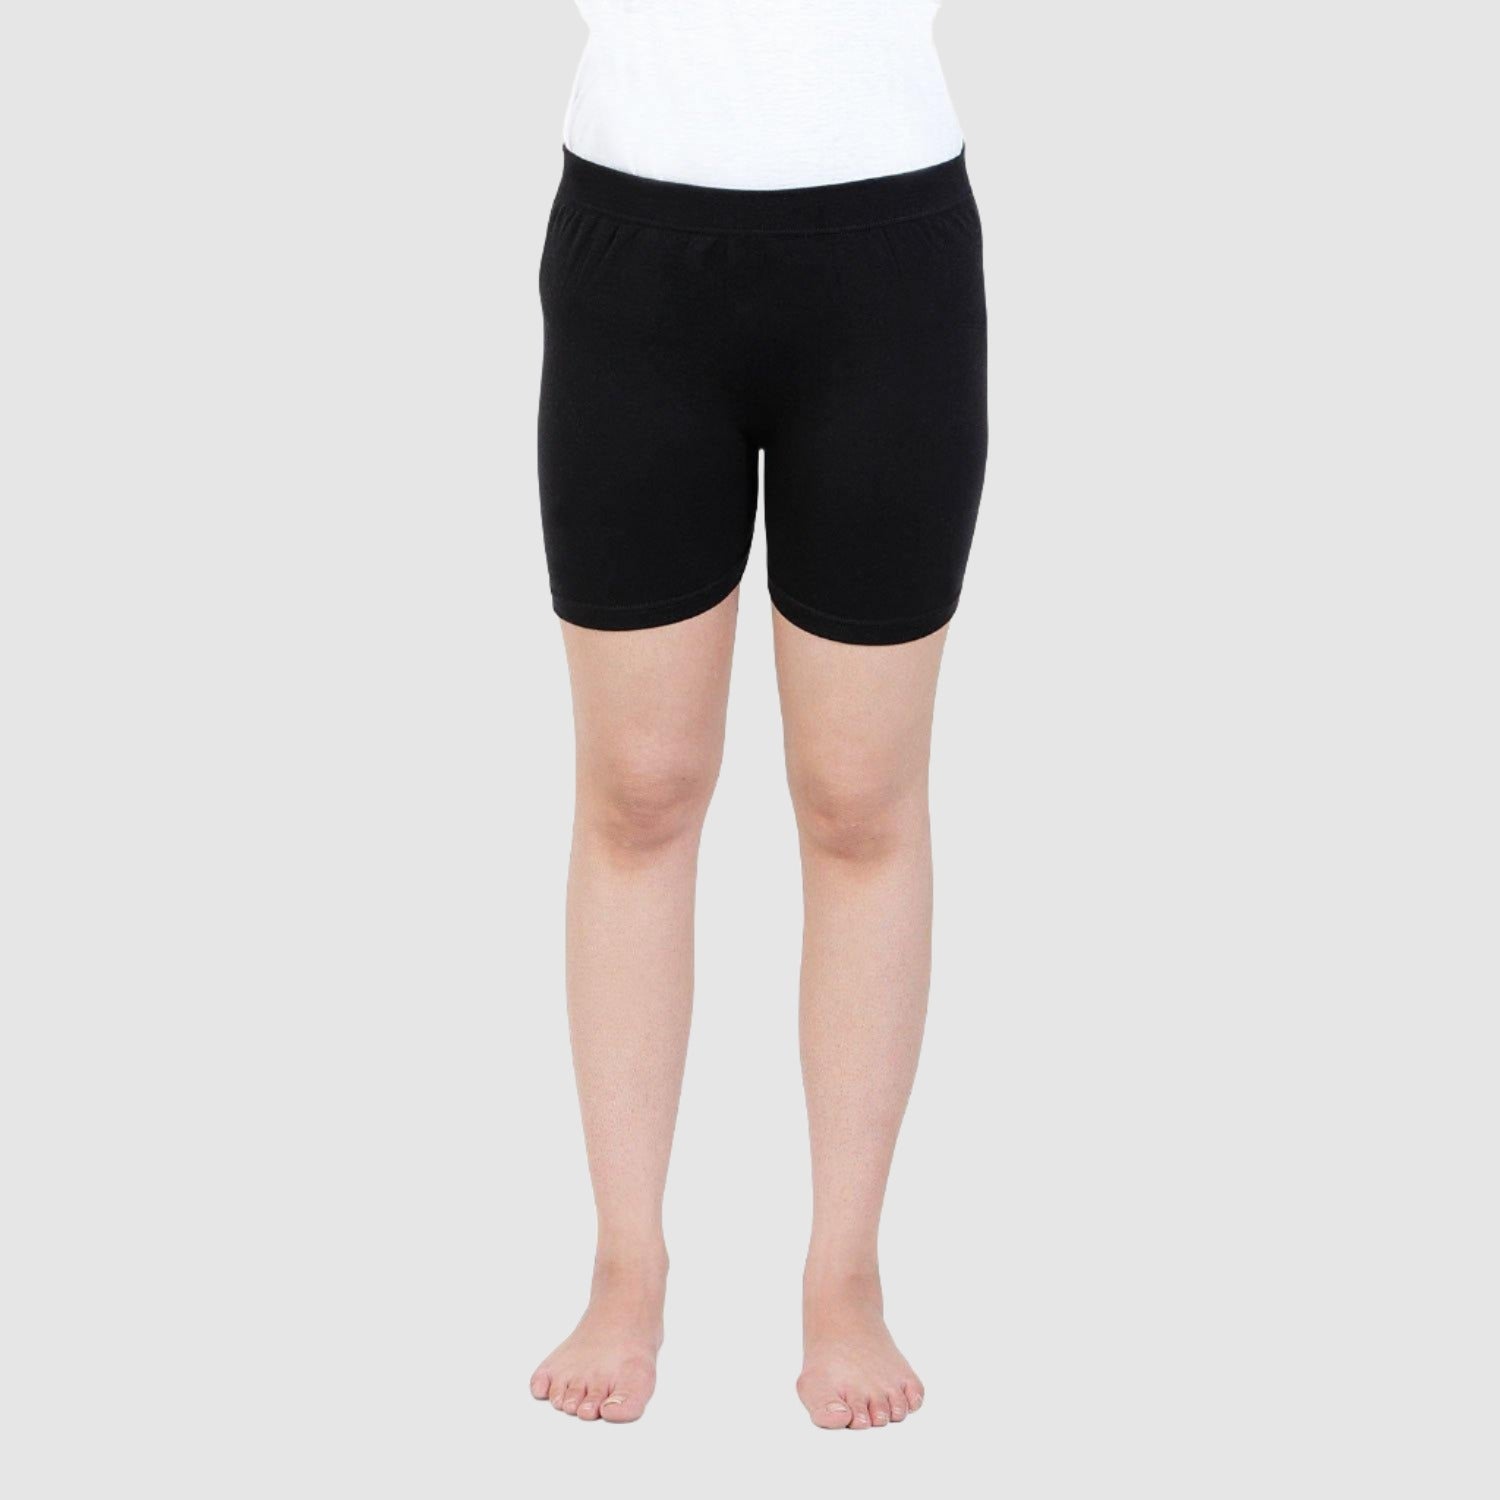 Plus Size Women's Bicycling Slip Shorts